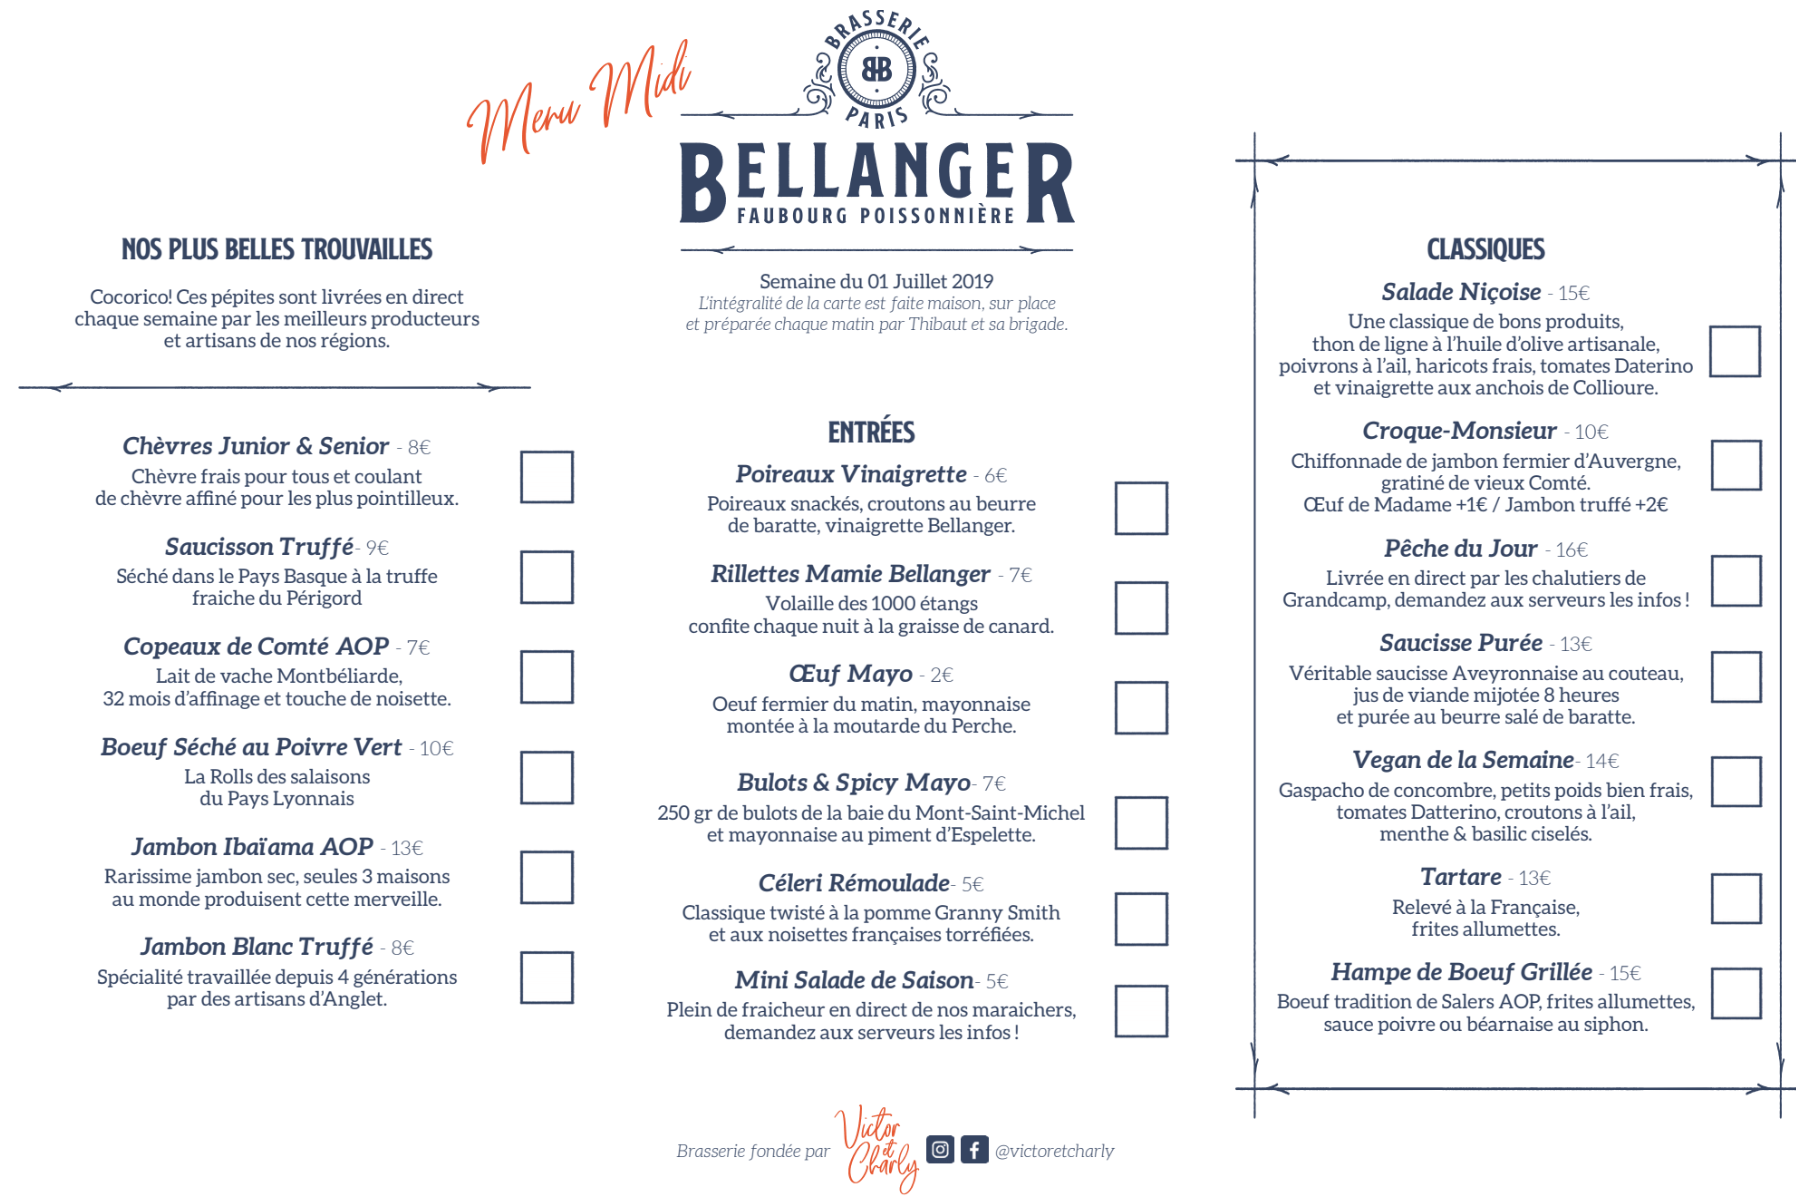 Brasserie Bellanger